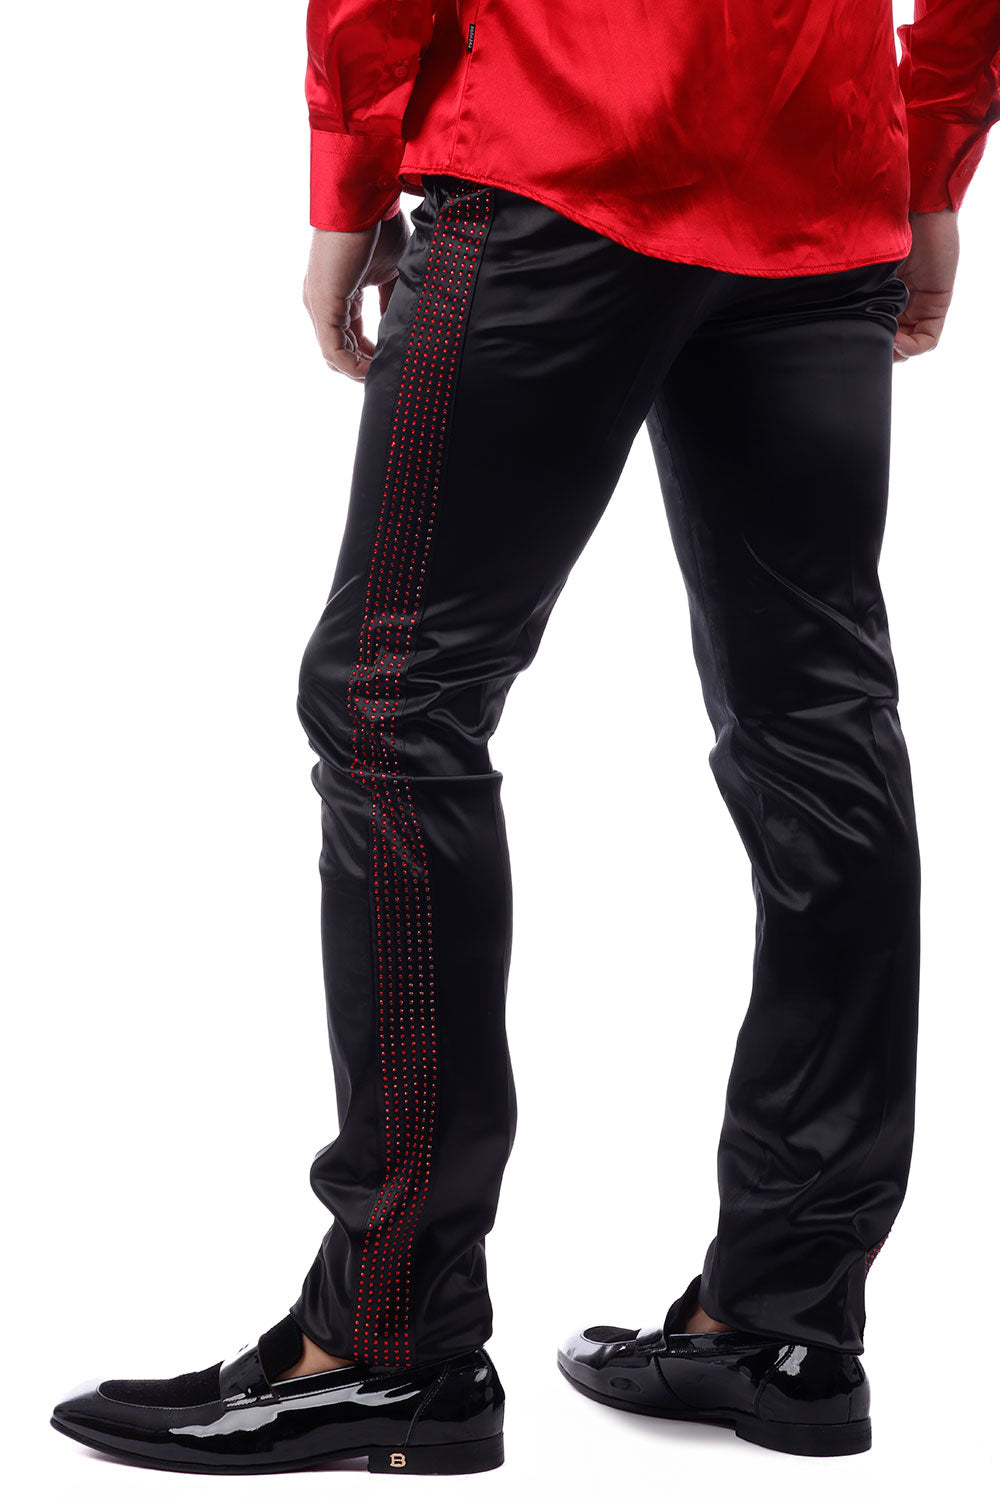 Barabas Men's Rhinestone Shinny Chino Dress Black Red Pants 1815 Black Red